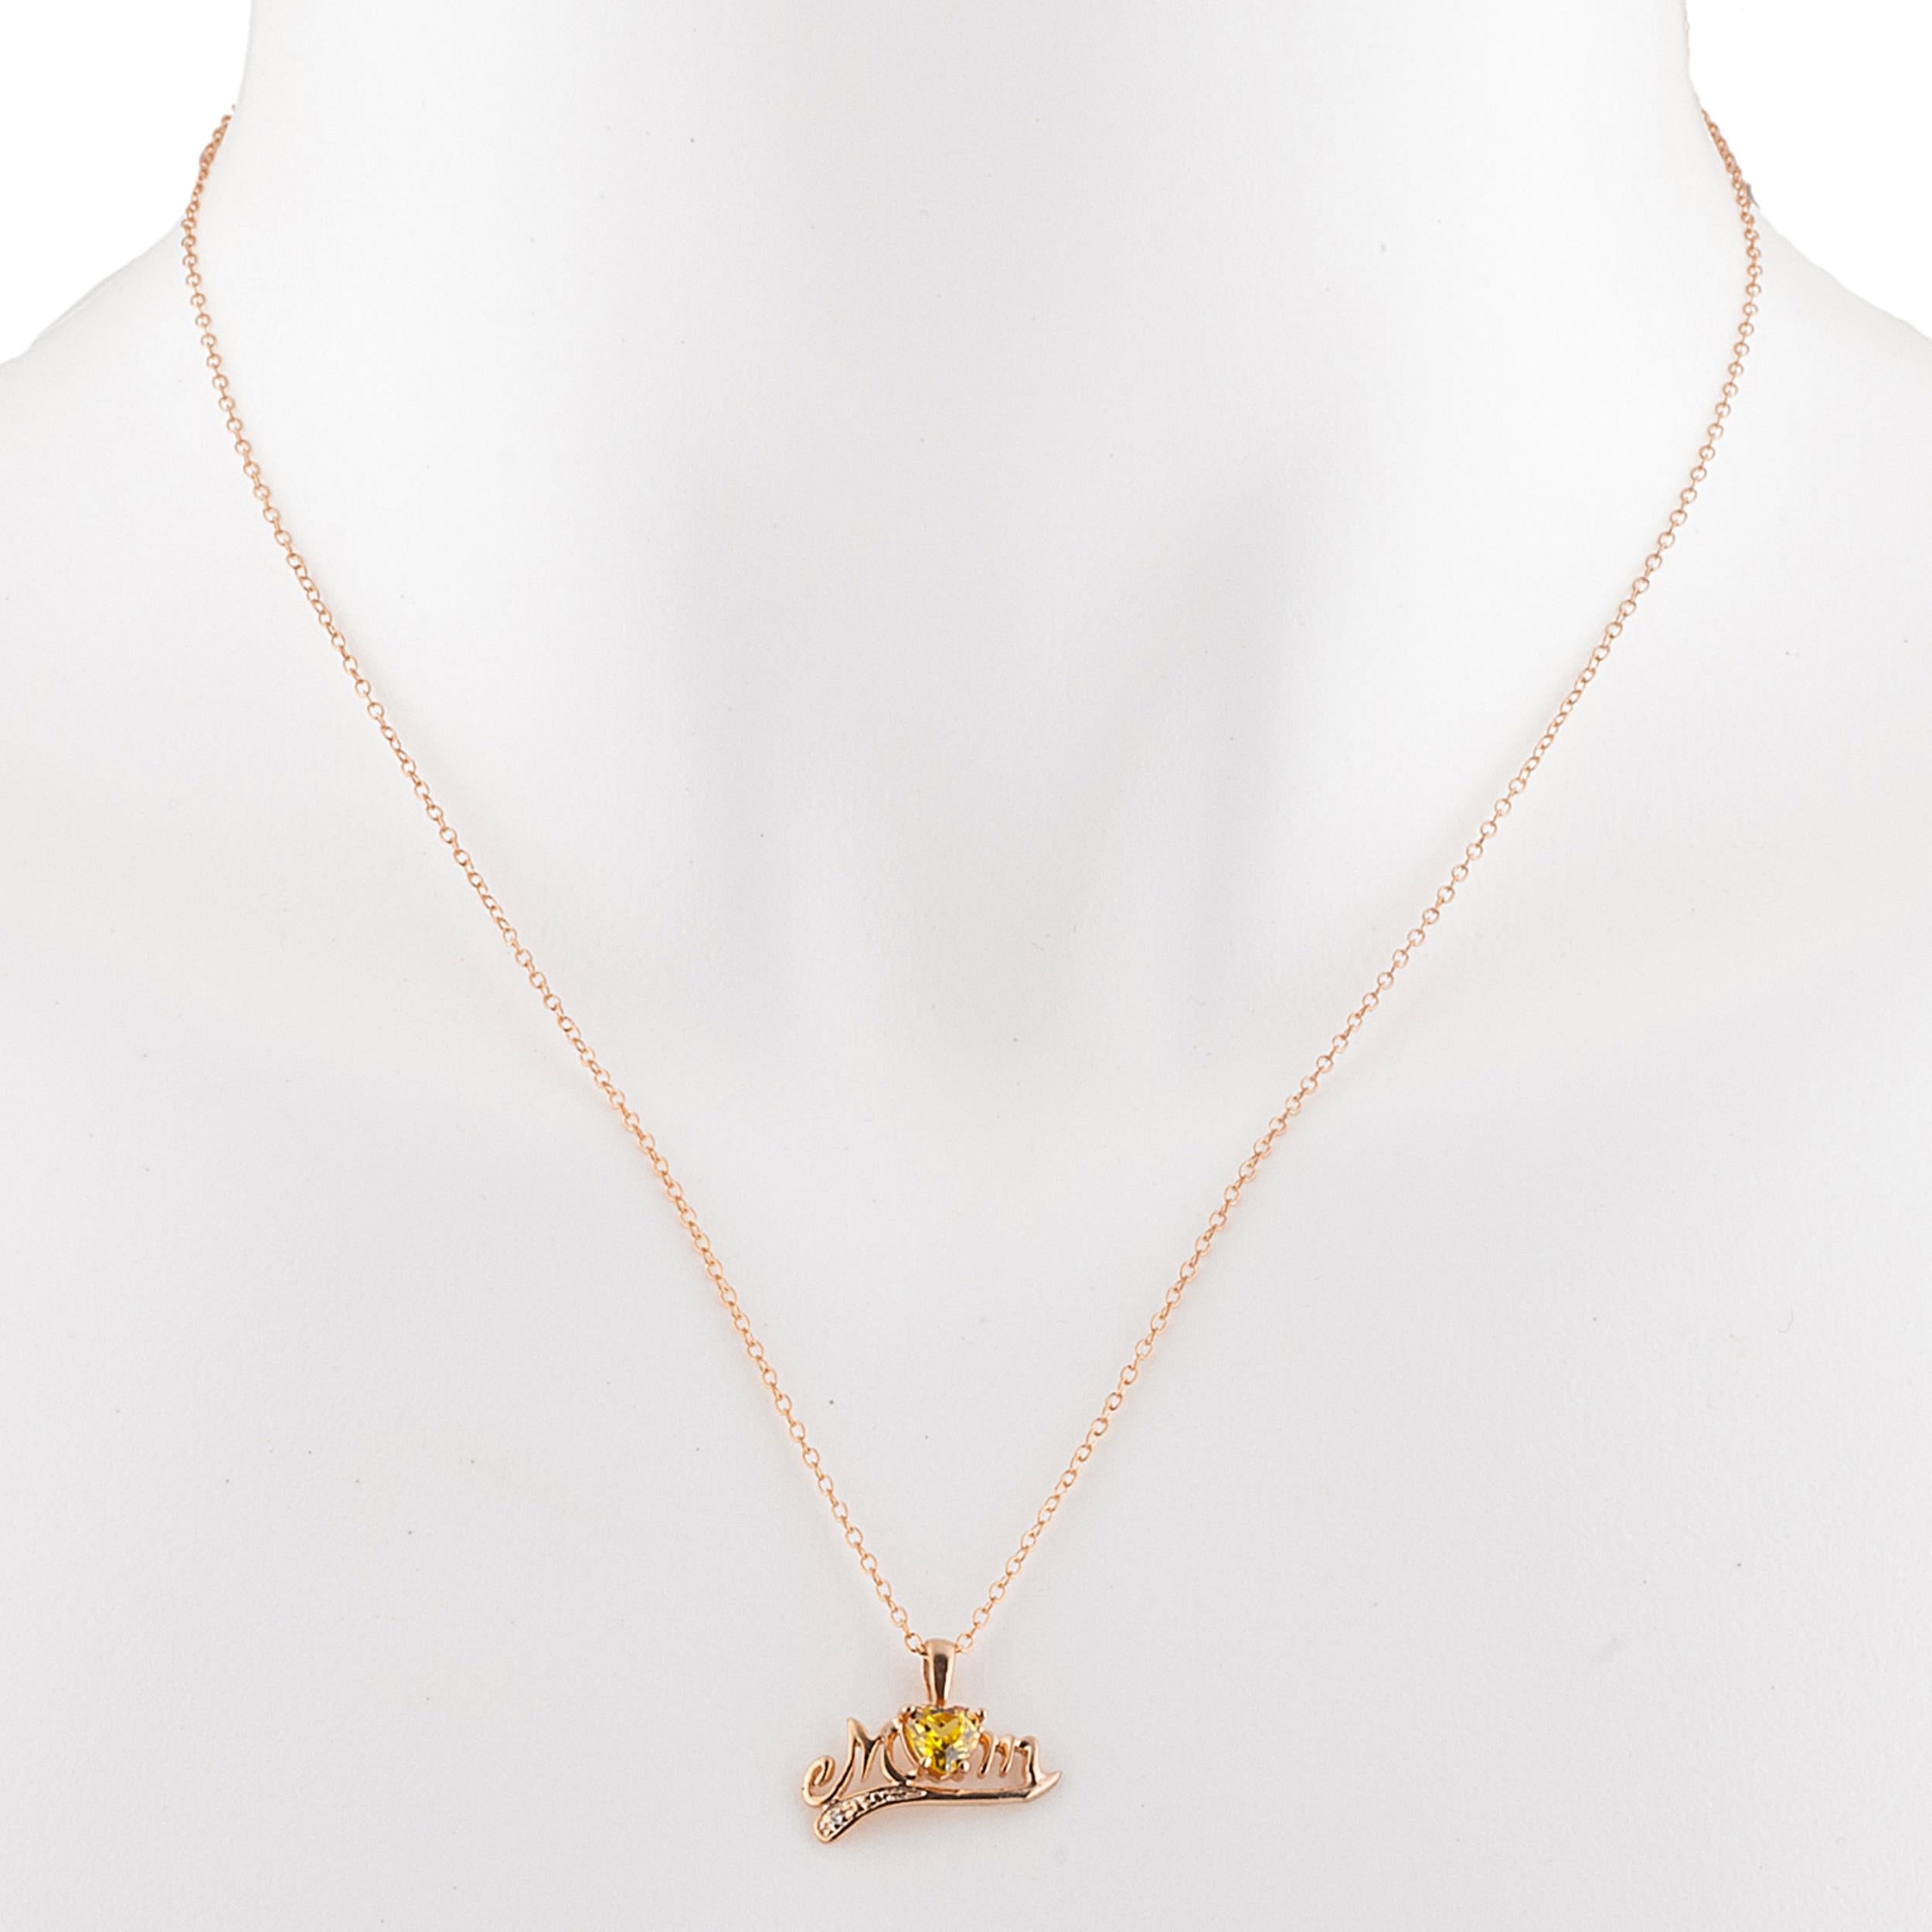 14Kt Gold Yellow Citrine & Diamond Heart Mom Pendant Necklace